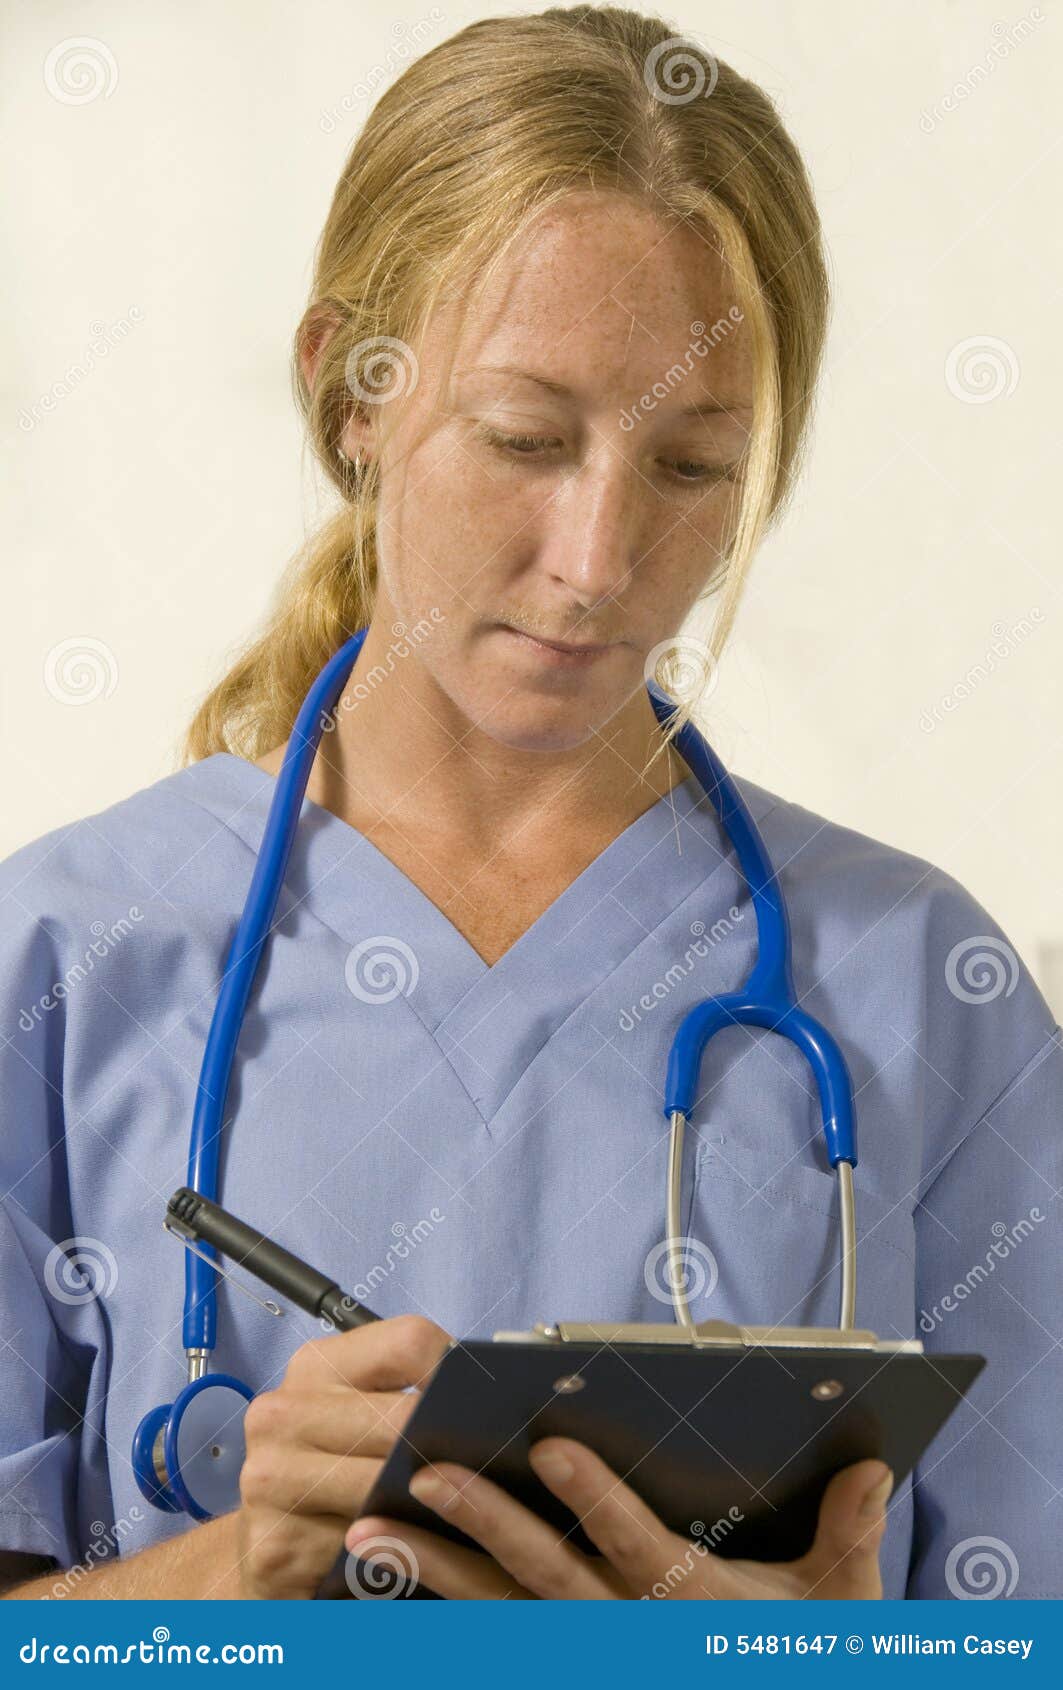 Can A Nurse Practitioner Write Prescriptions